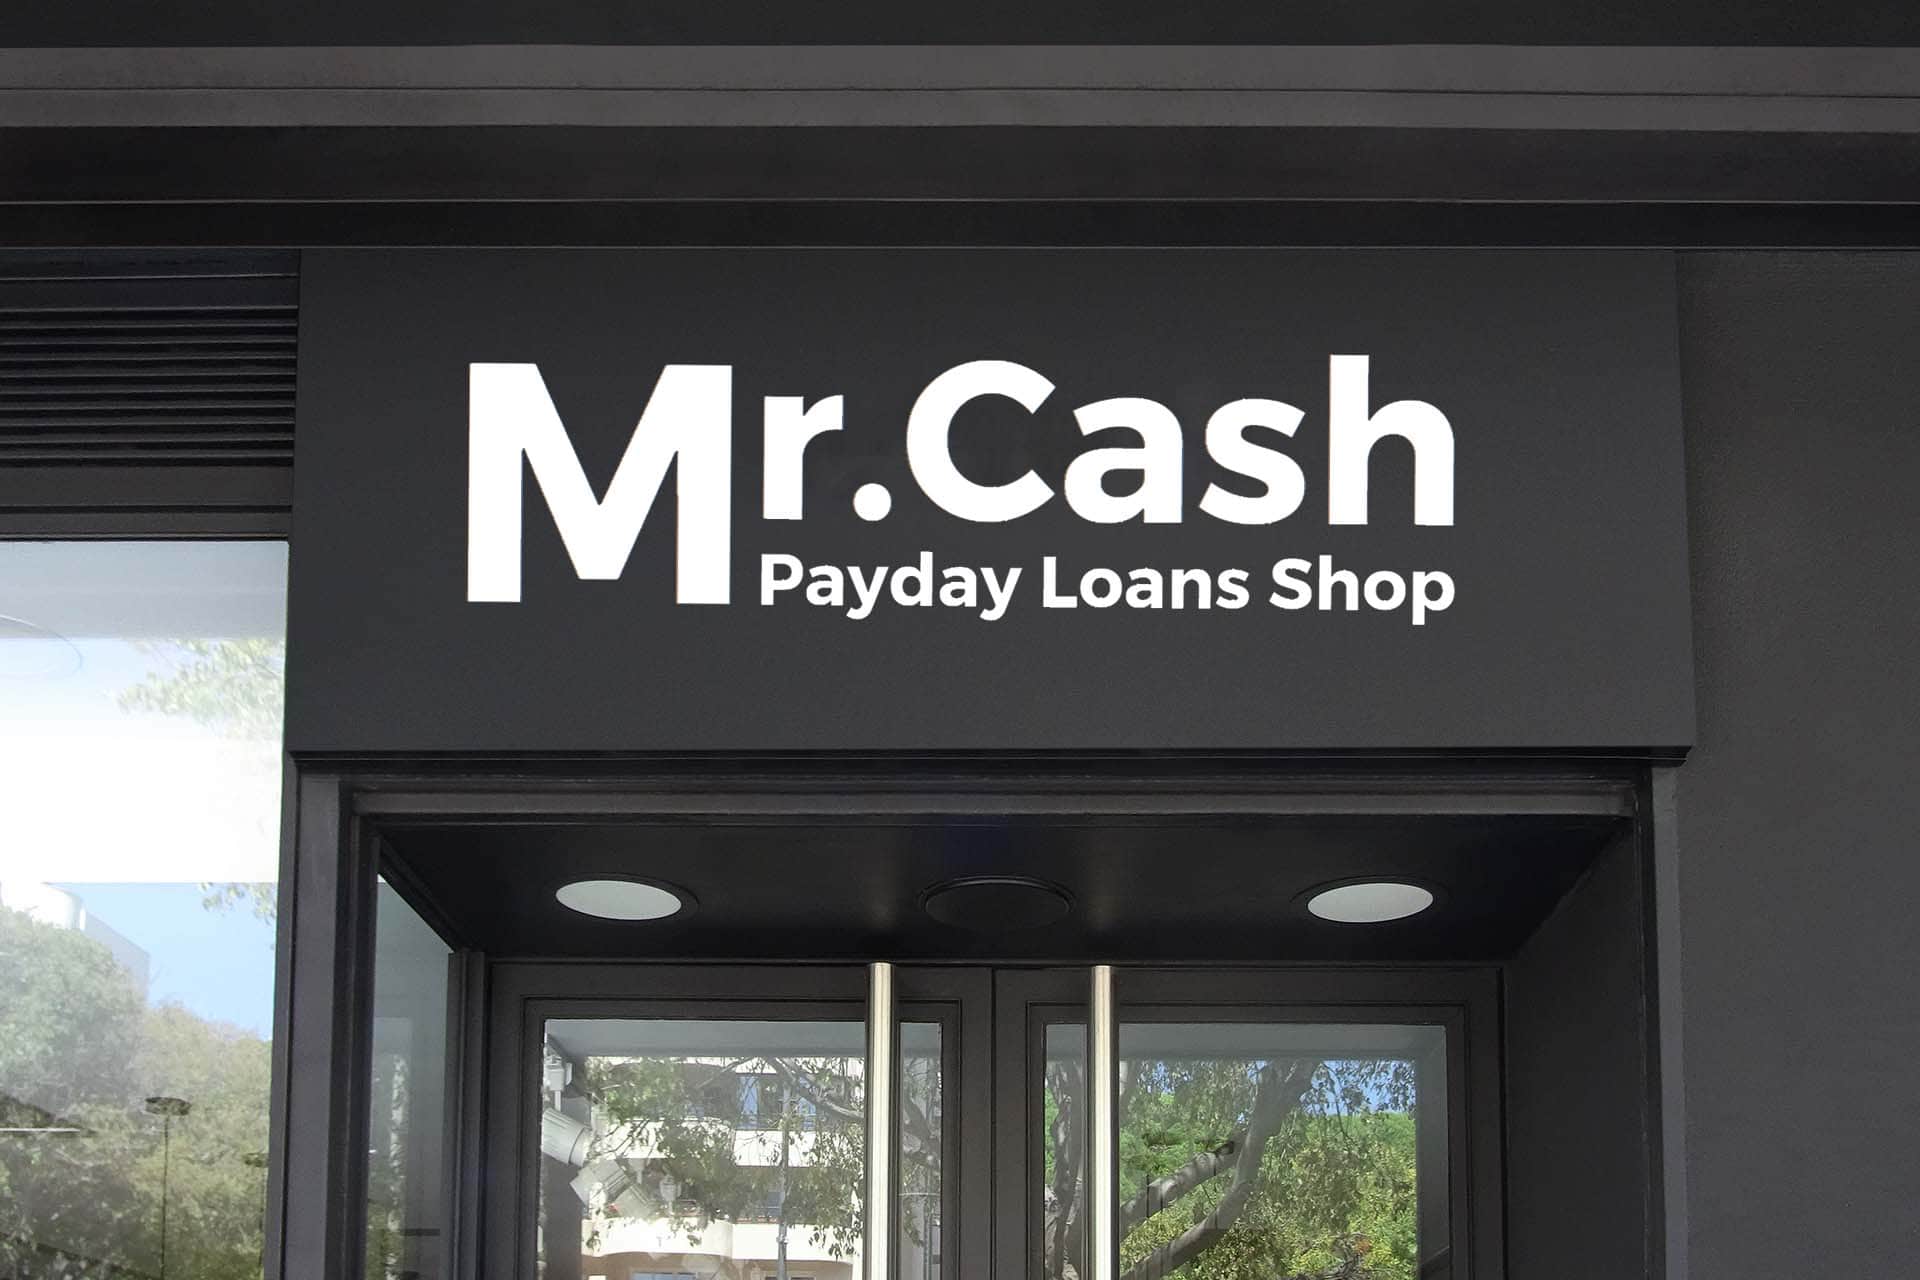 Mr. Cash Payday Loans Shop Store